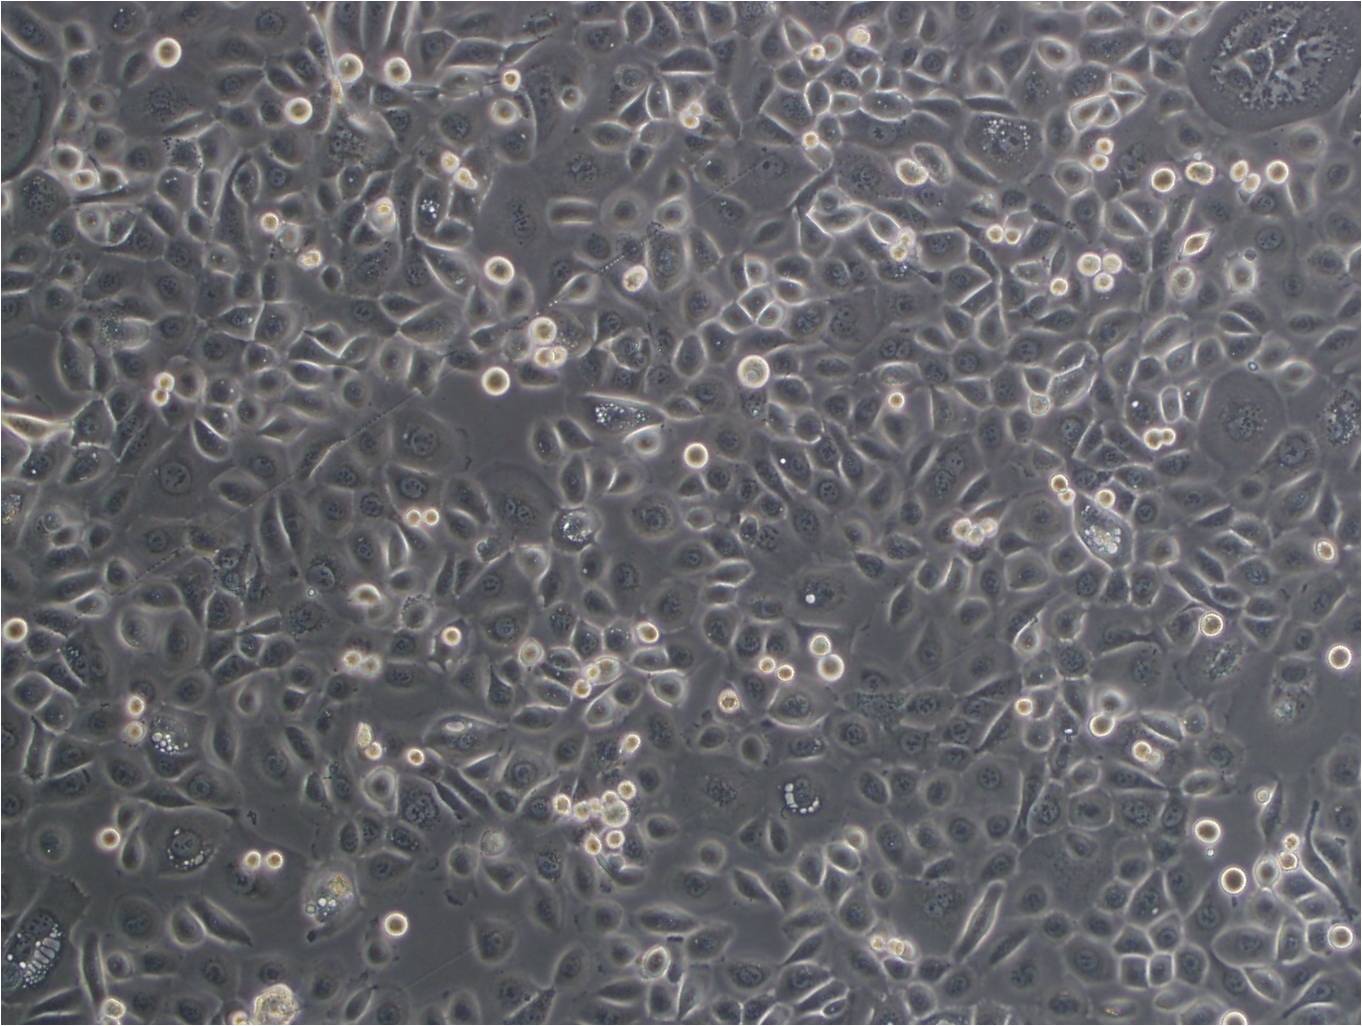 SNU-739 cell line人肝癌细胞系,SNU-739 cell line